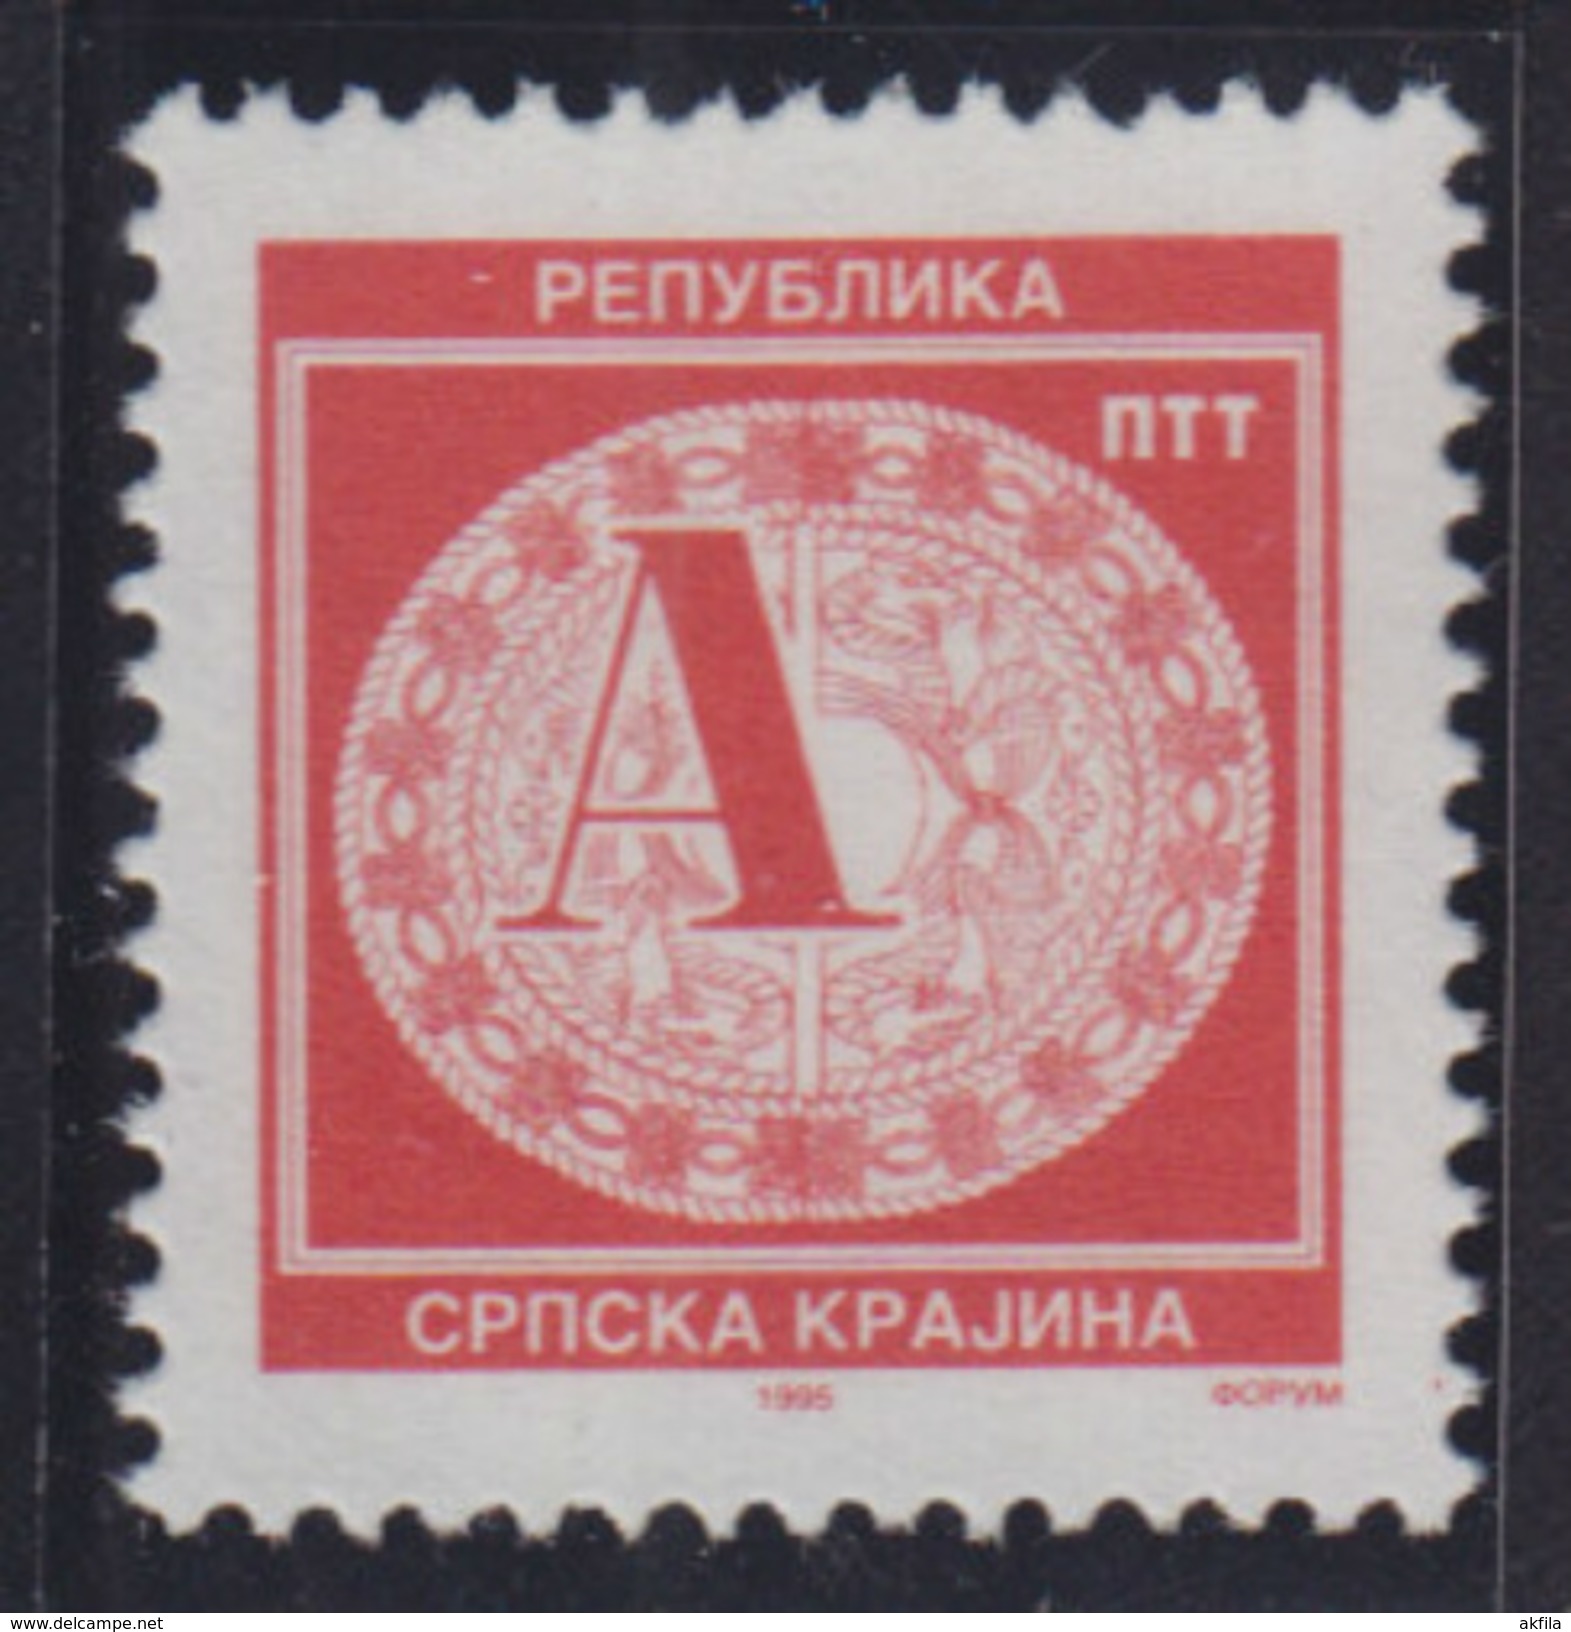 Croatia Republic Of Serbian Krajina 1995 Definitive A - Decoration, MNH (**) Michel 37 - Croatie